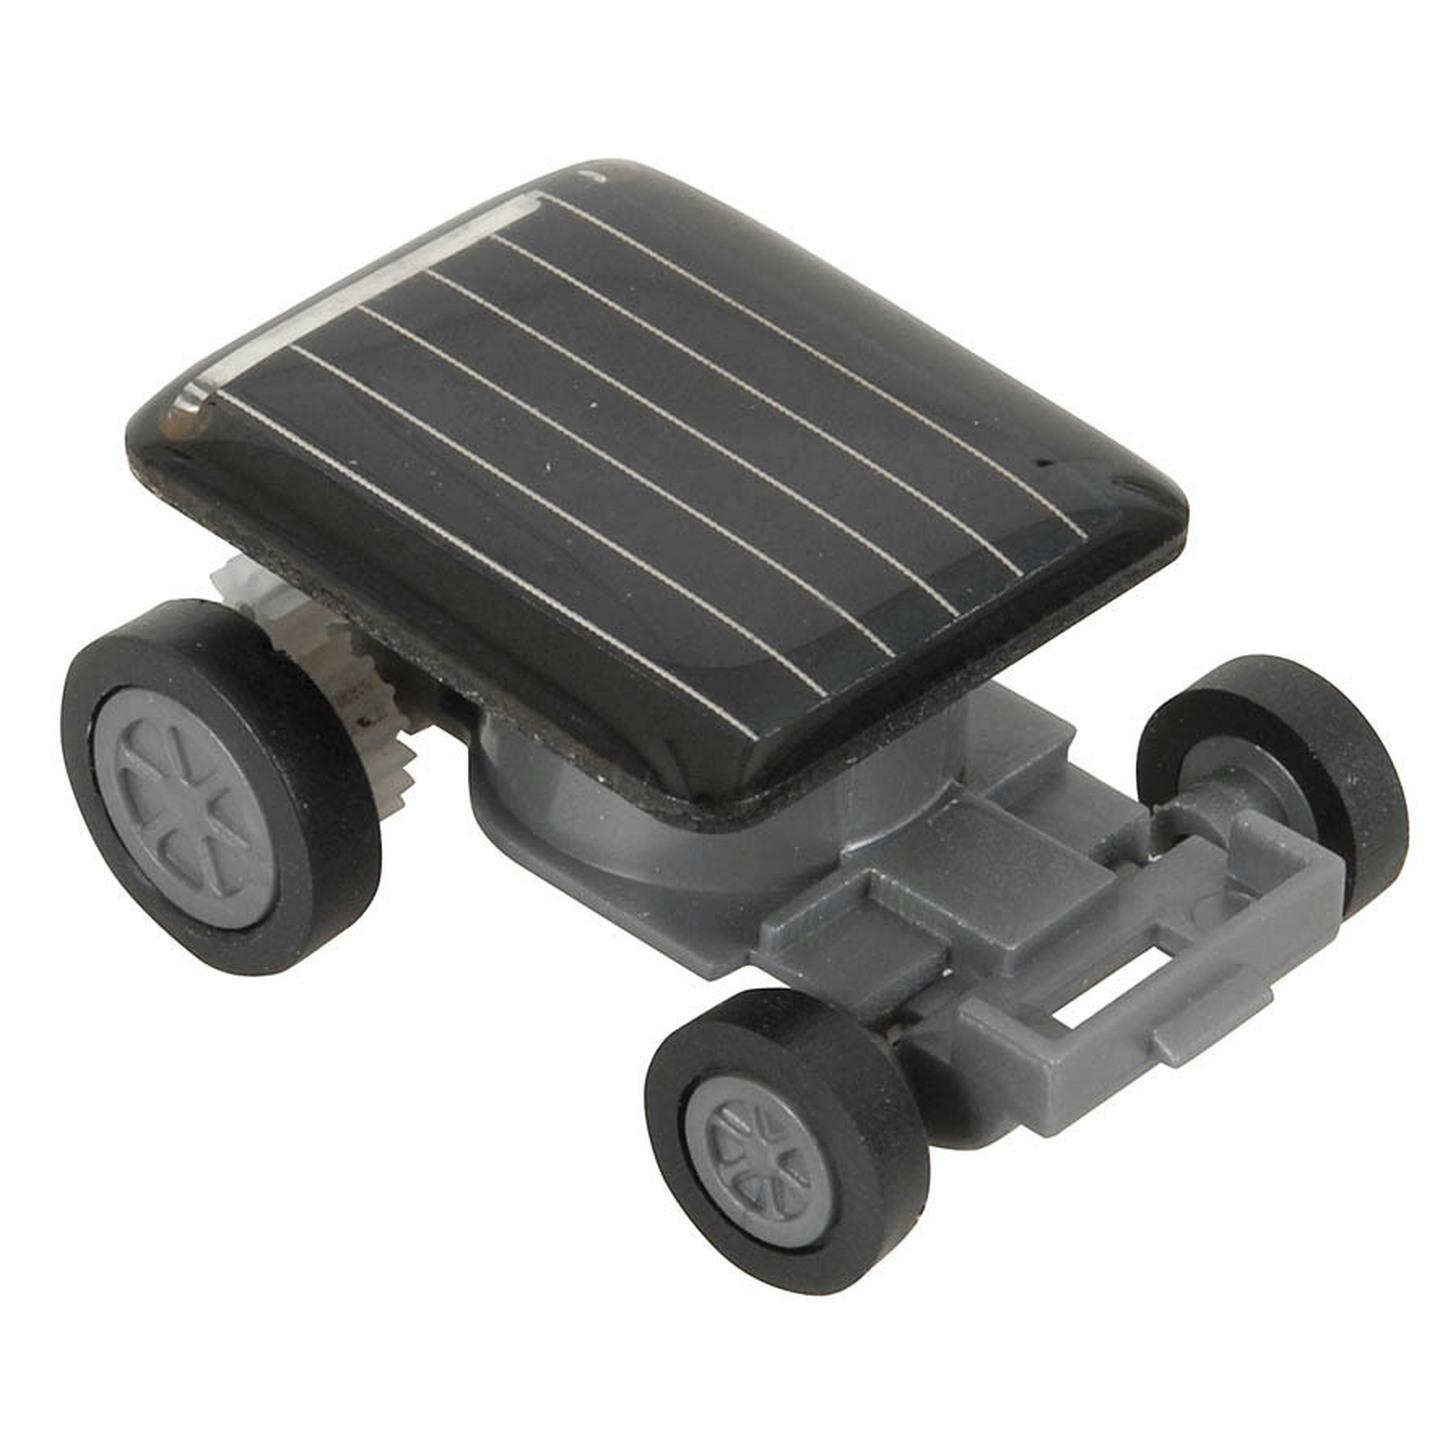 Micro Solar Car Racer